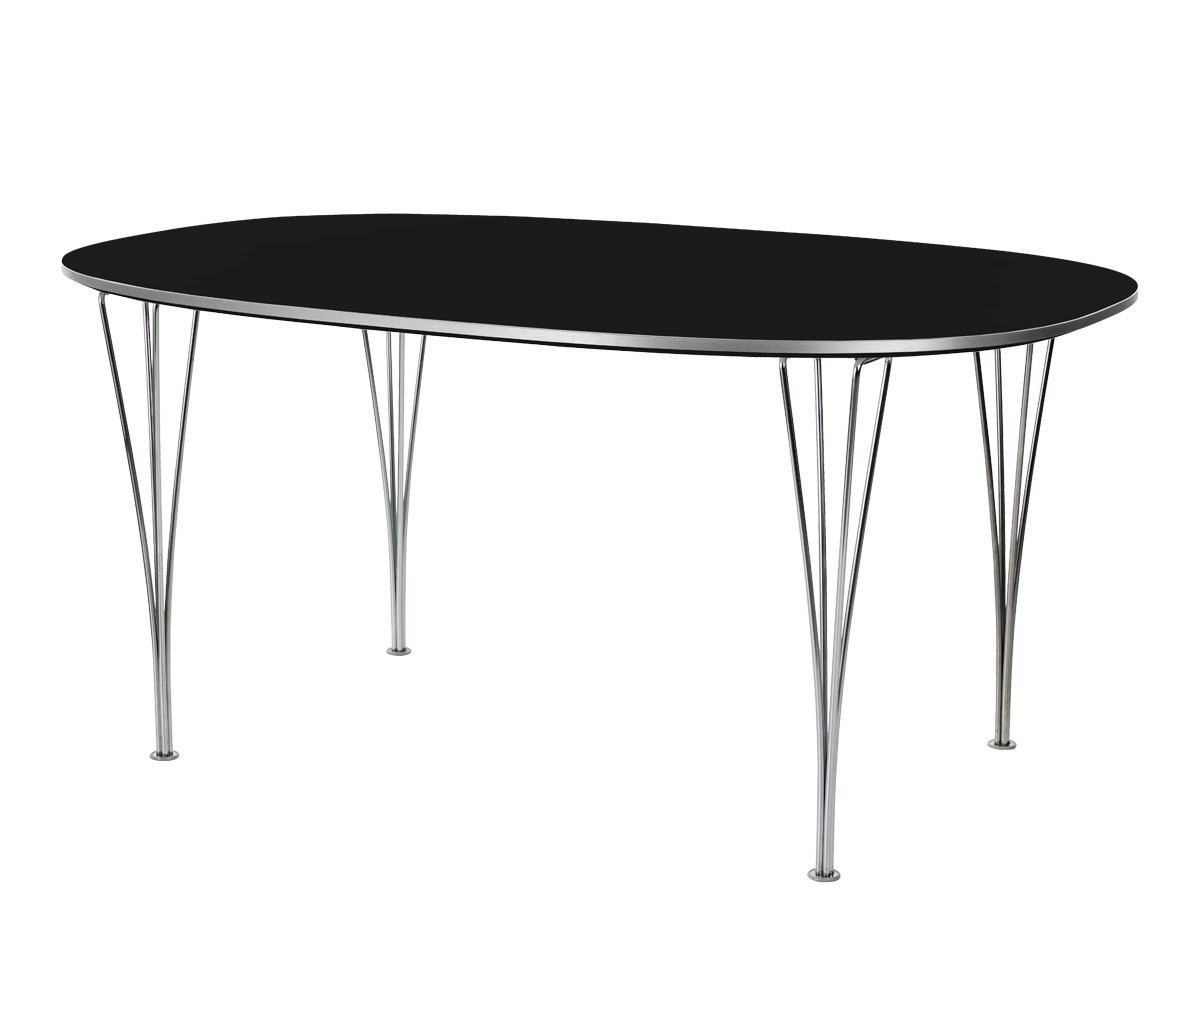 Fritz Hansen Dining Table B613, “Superellipse” Black/Chrome, 120 x 180 cm